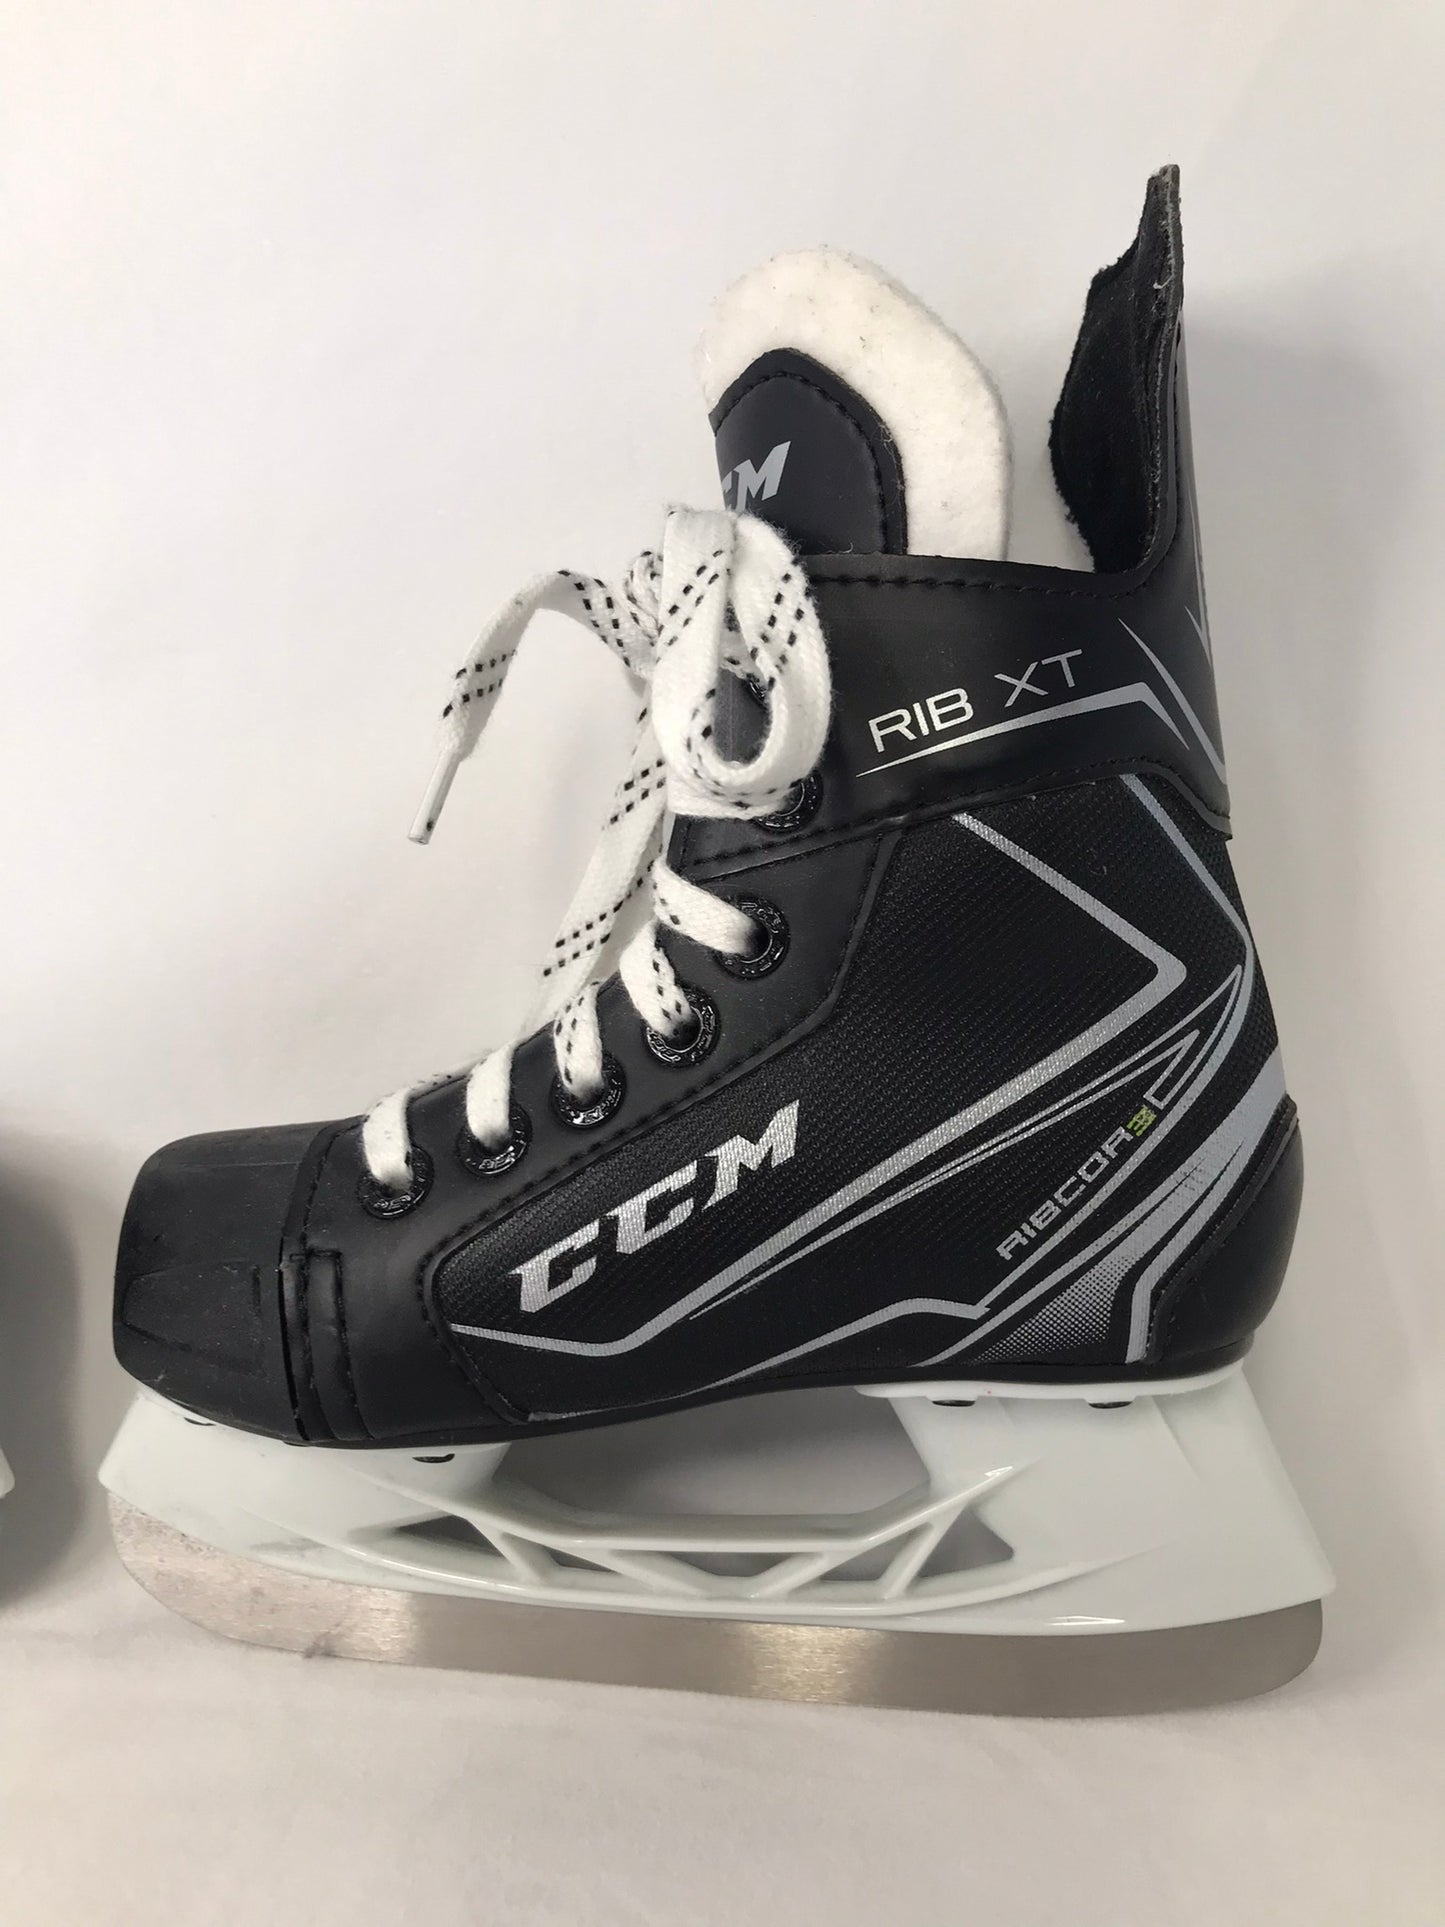 Hockey Skates Child Size 11 Shoe Size CCM Ribcore New Demo Model